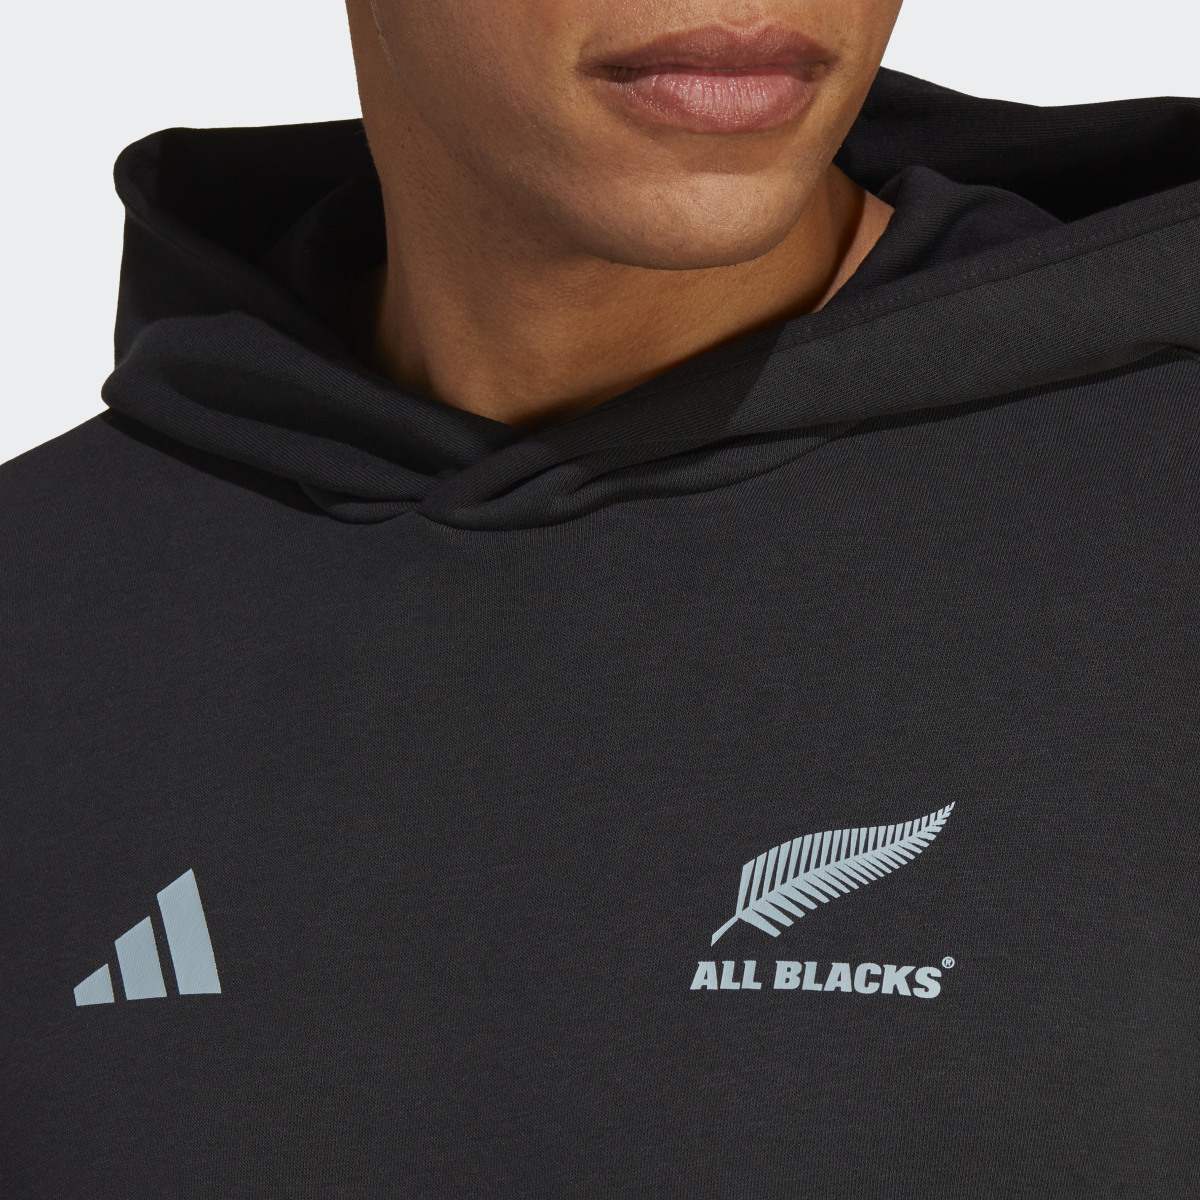 Adidas Sudadera con capucha All Blacks Rugby Supporters. 6